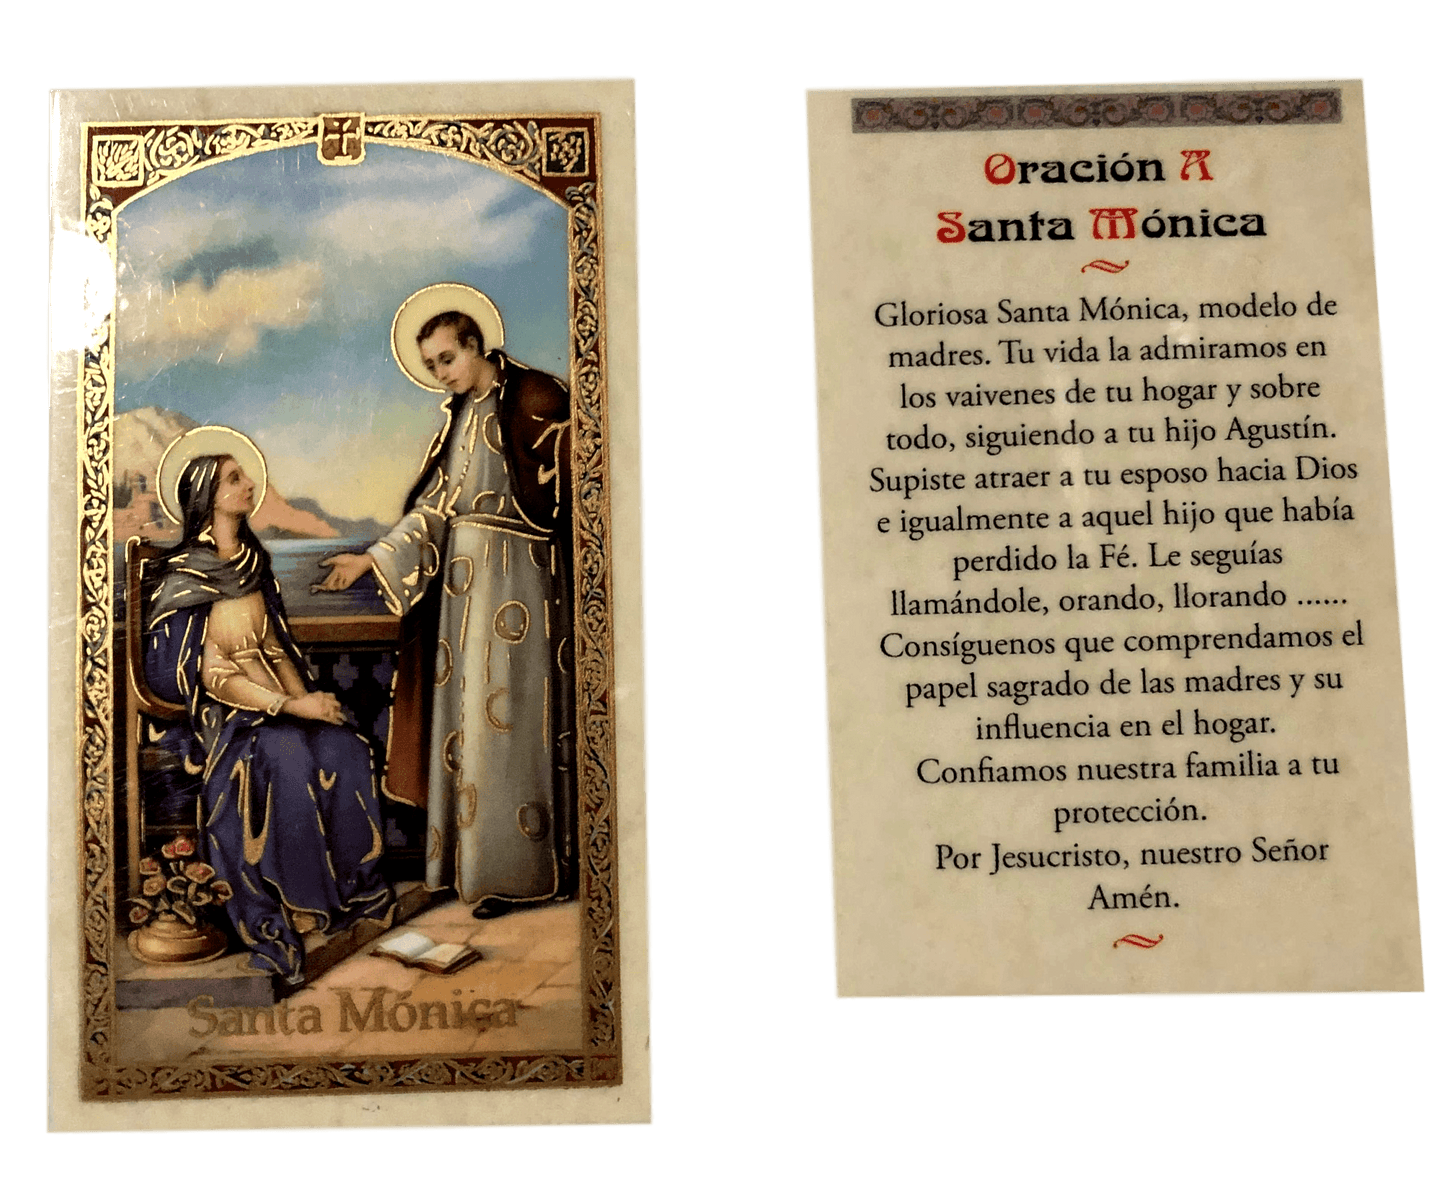 Prayer Card Oracion A Santa Monica Laminated HC9-102S - Ysleta Mission Gift Shop- VOTED El Paso's Best Gift Shop